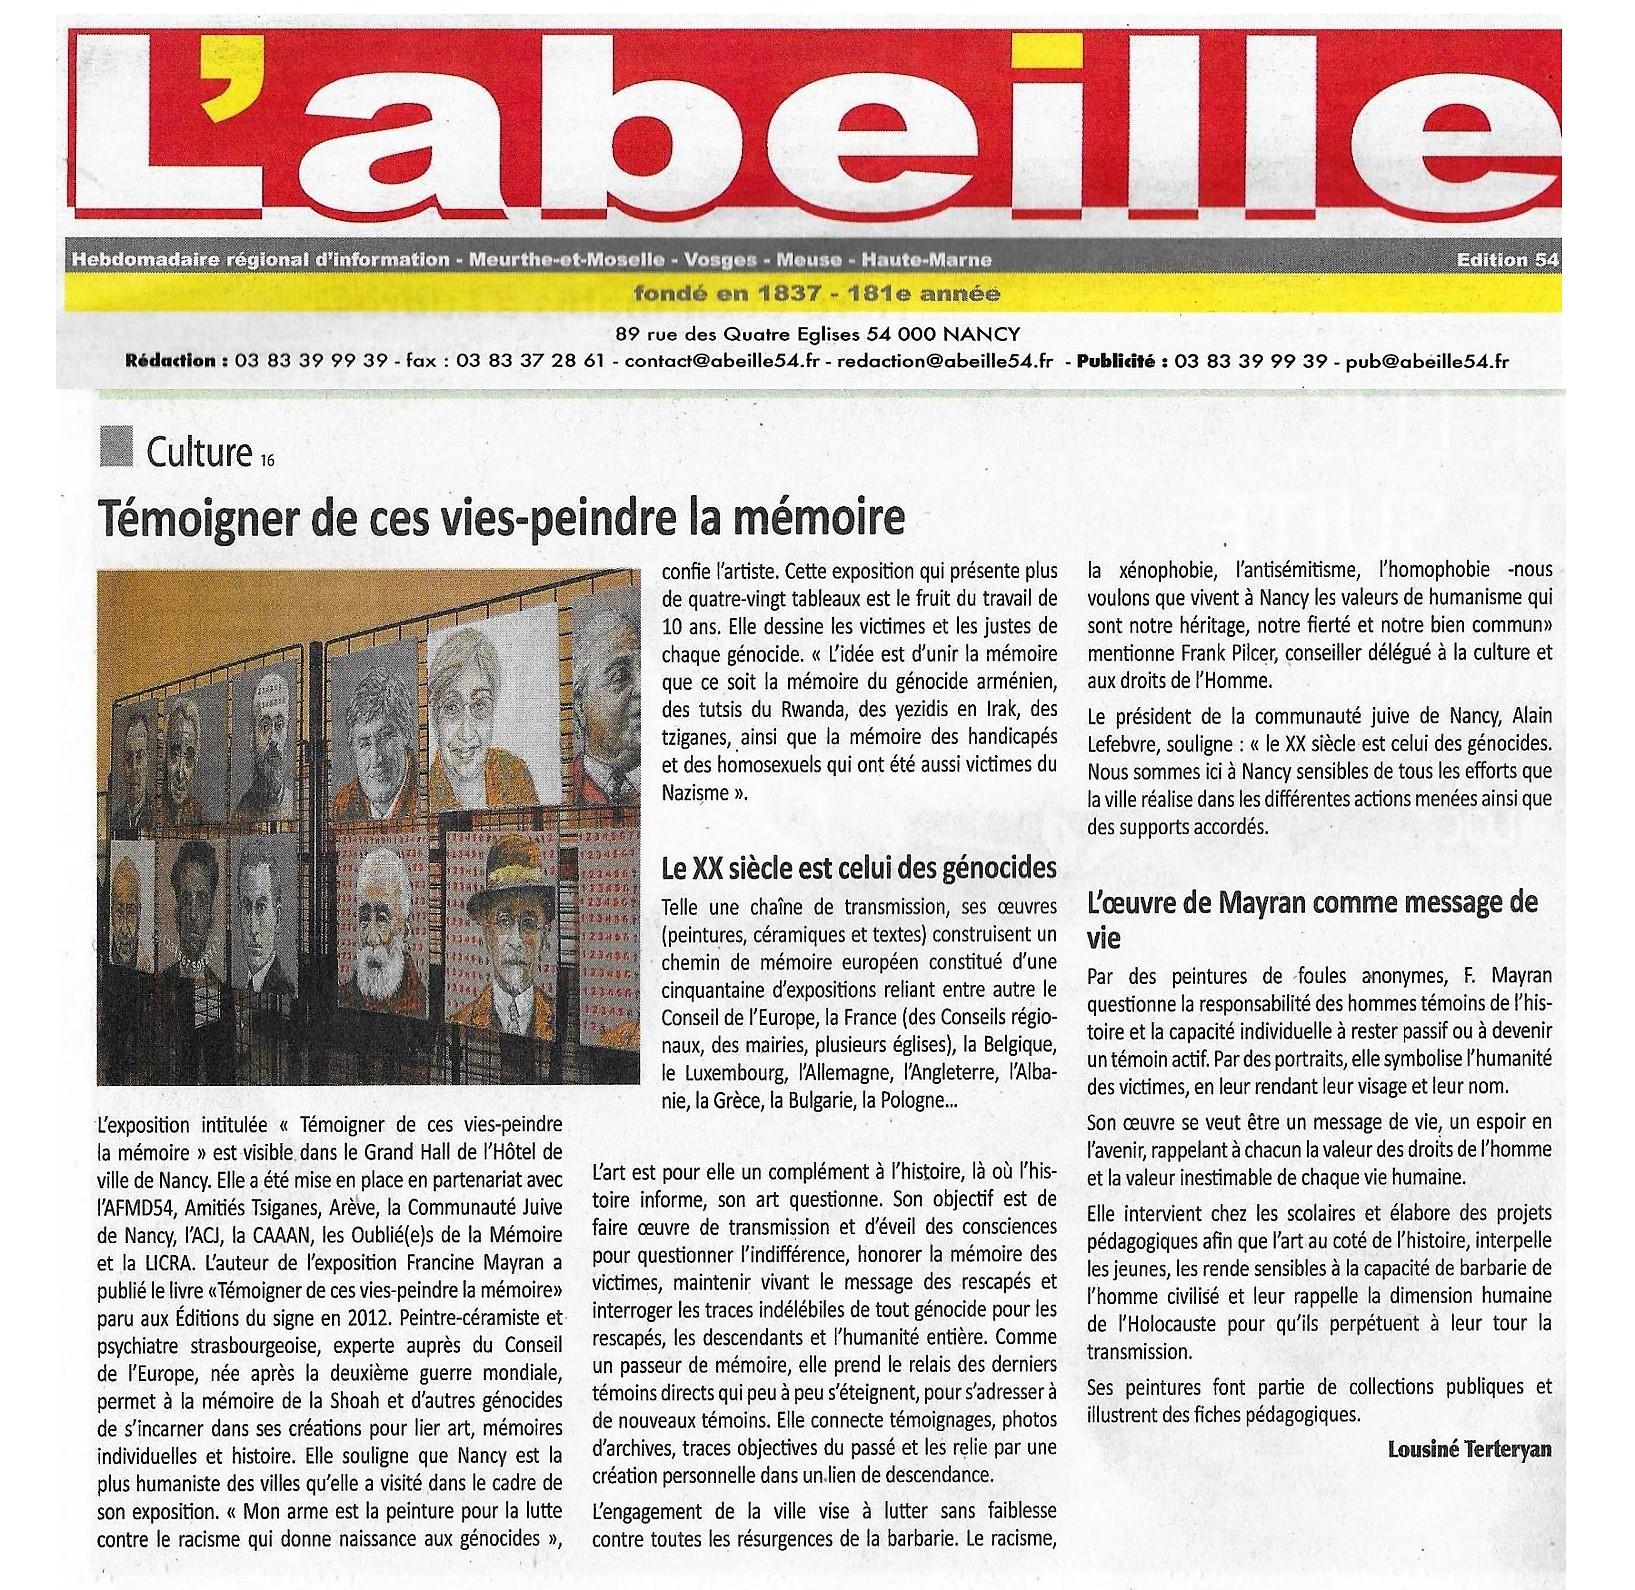 L'ABEILLE. Edition 54